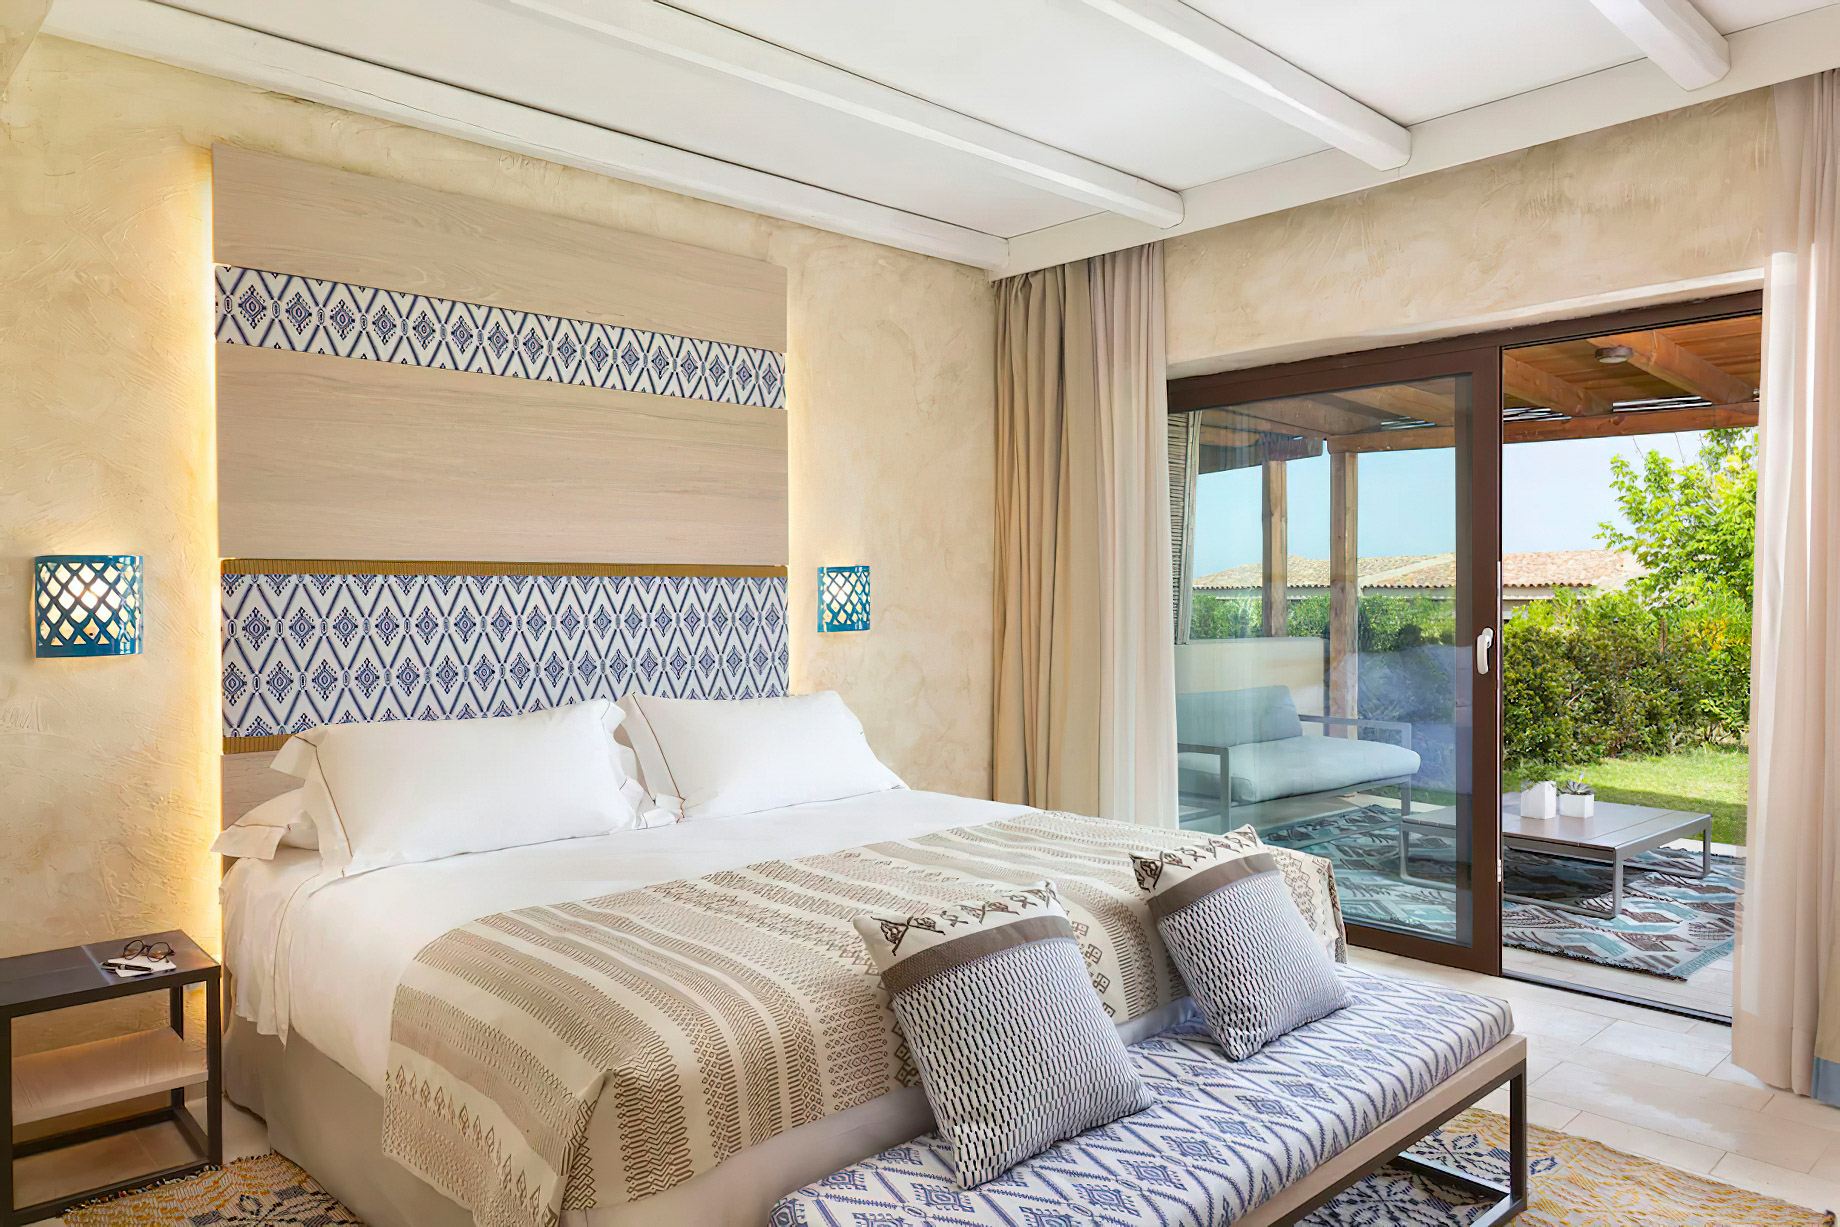 Baglioni Resort Sardinia – San Teodoro, Sardegna, Italy – Rooftop Terrace Suite Bedroom